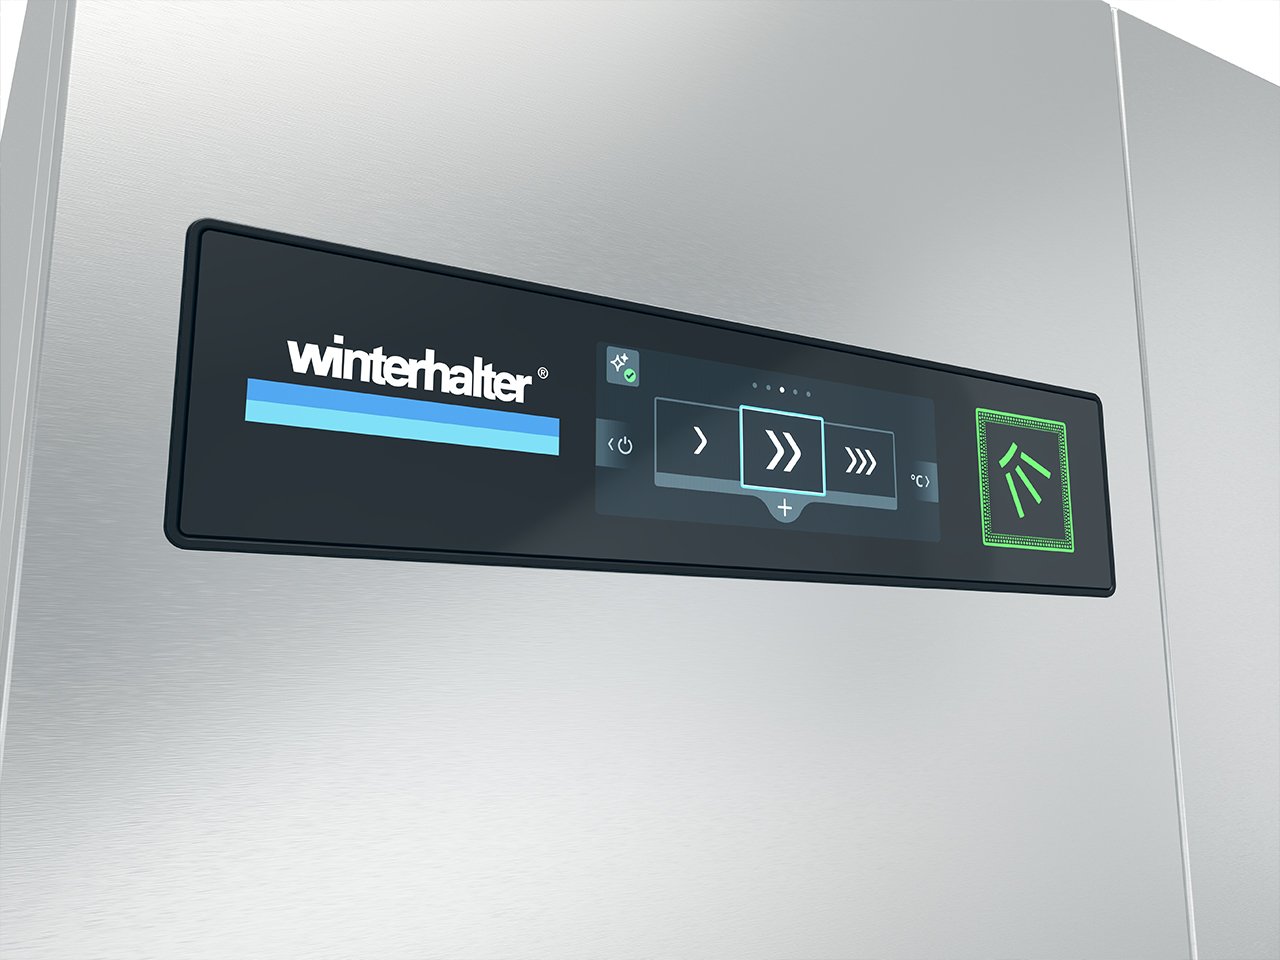 Winterhalter conveyor dishwashers smart touch display